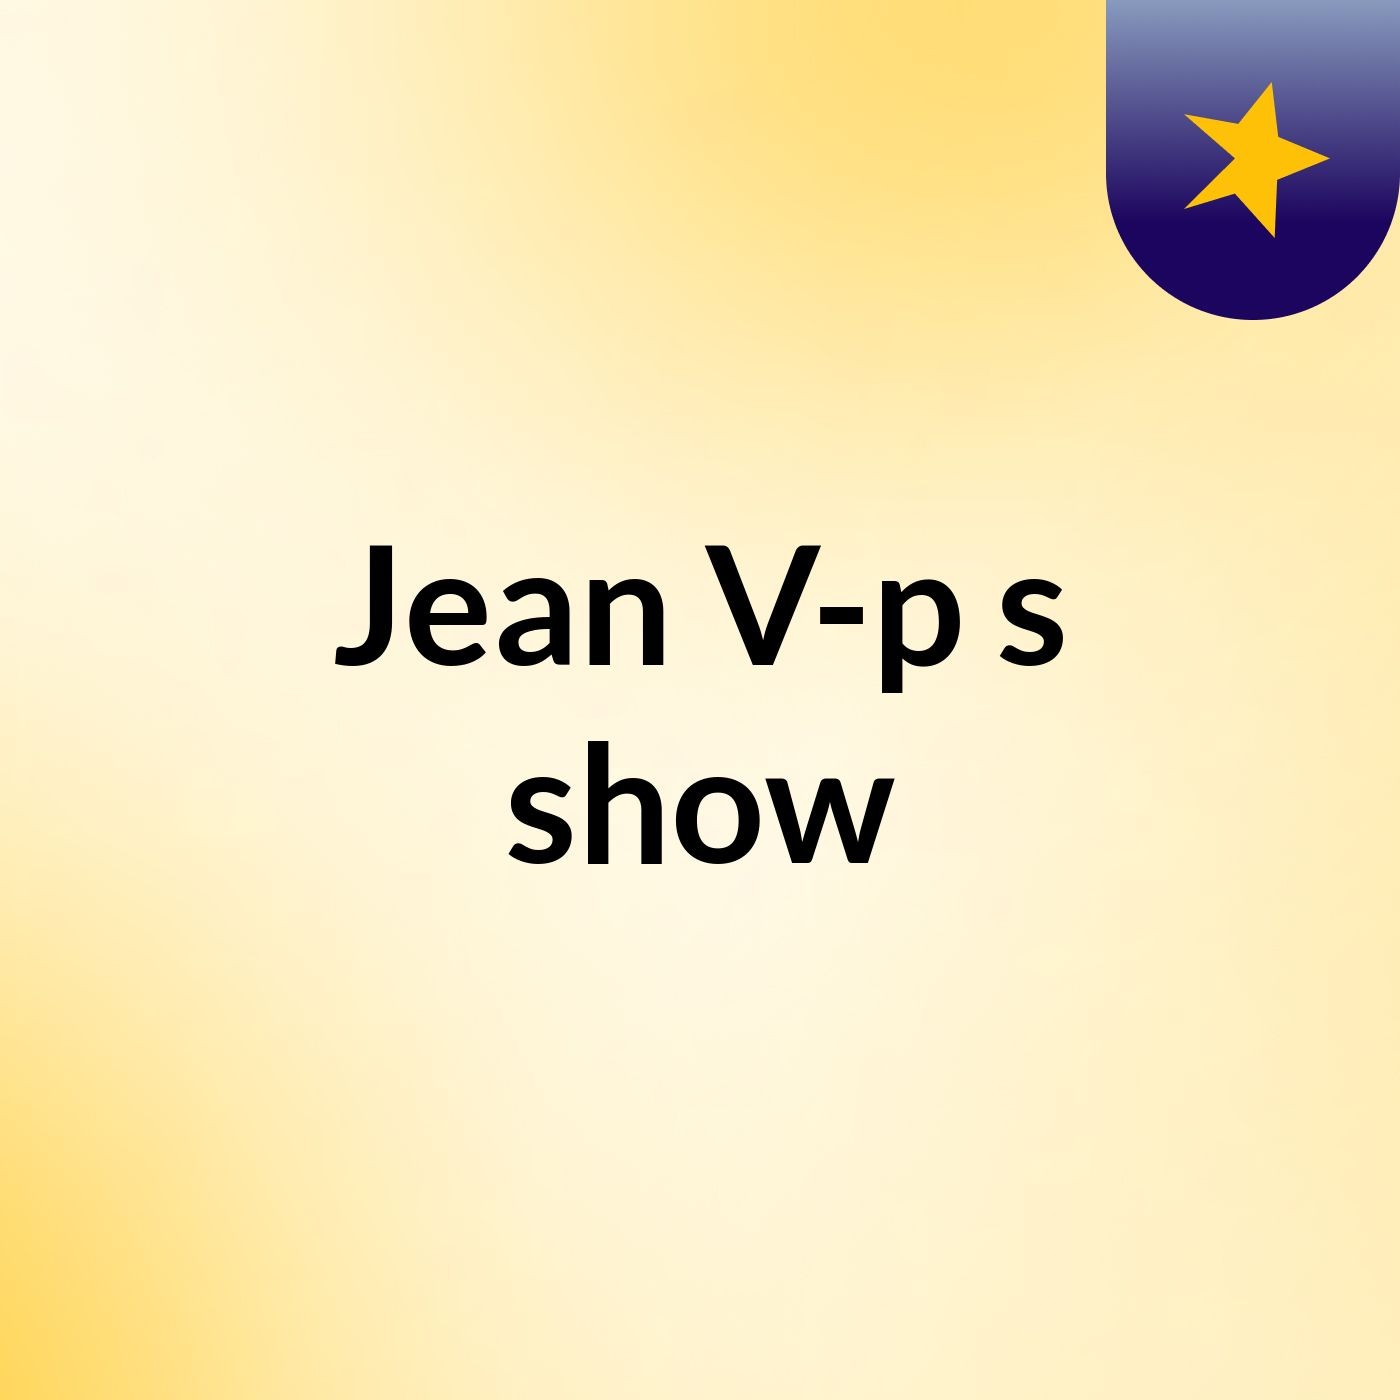 Jean V-p's show